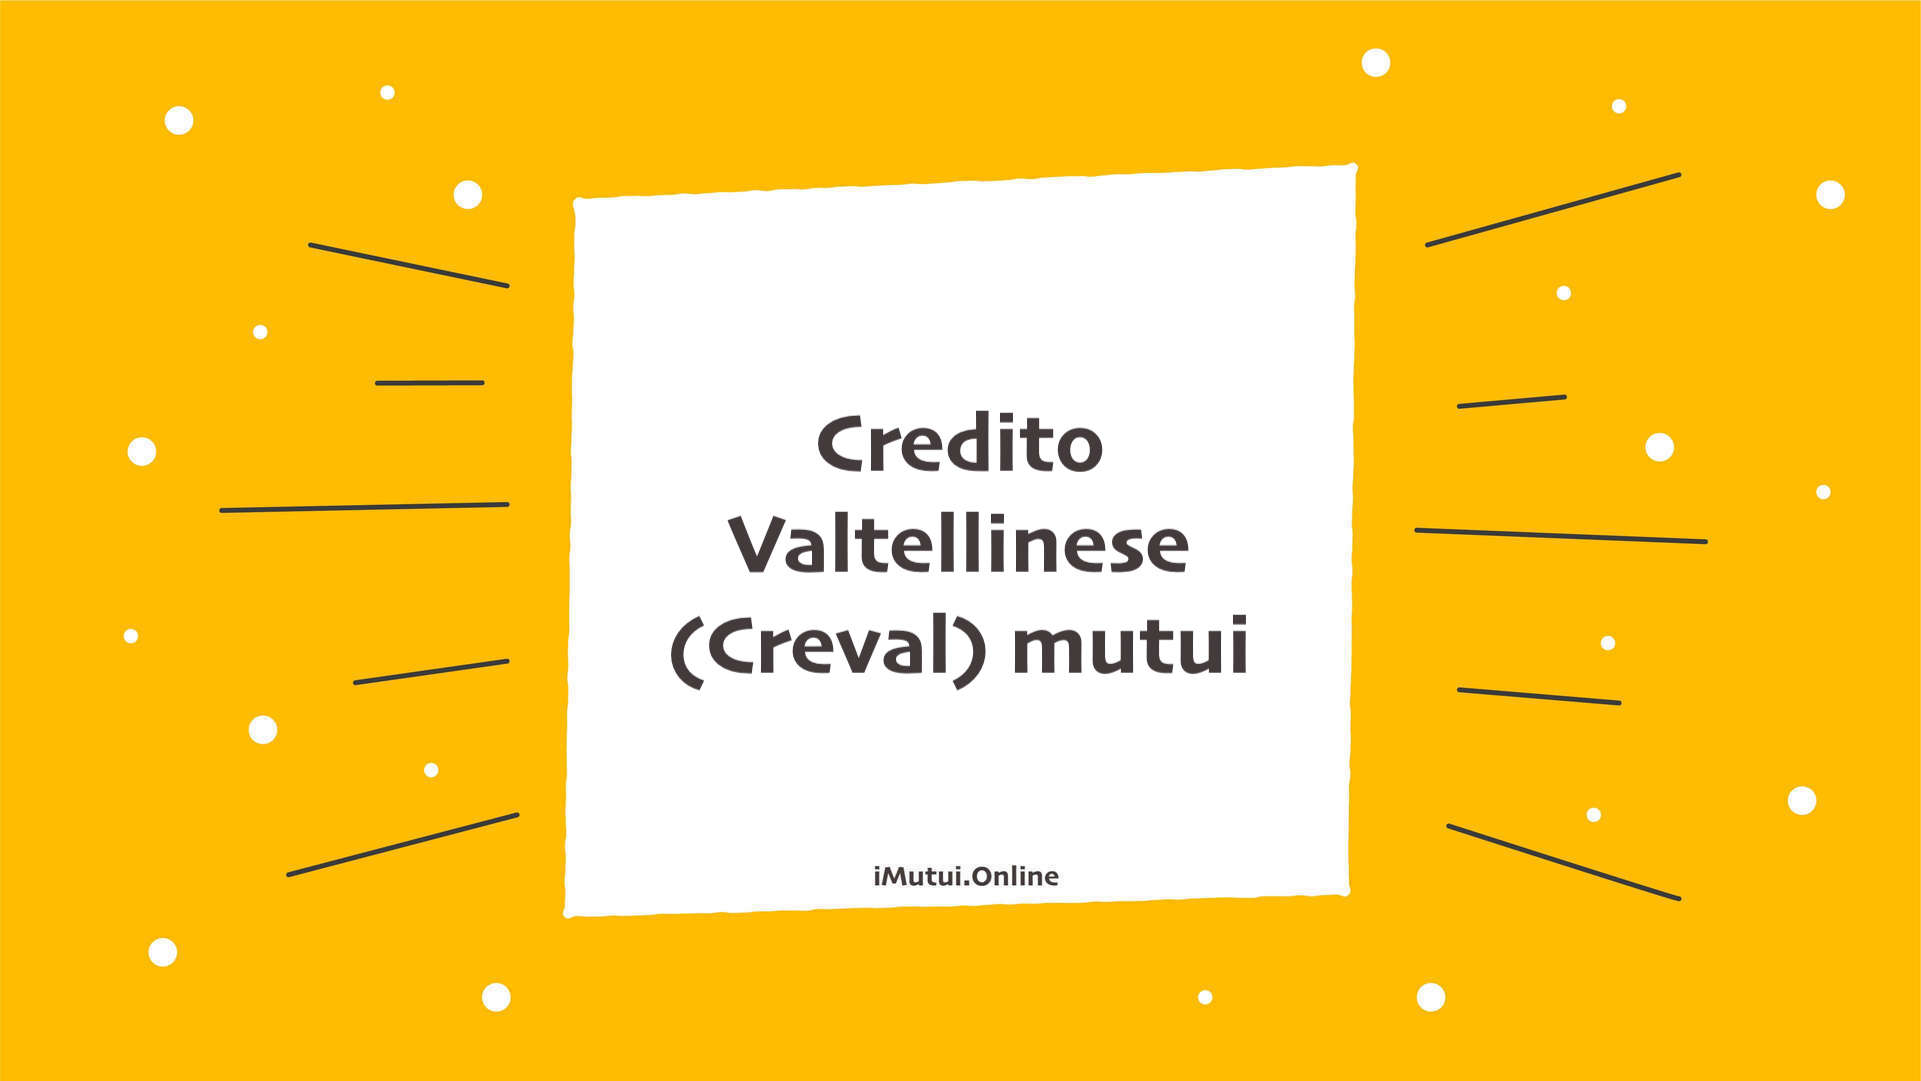 Credito Valtellinese (Creval) mutui